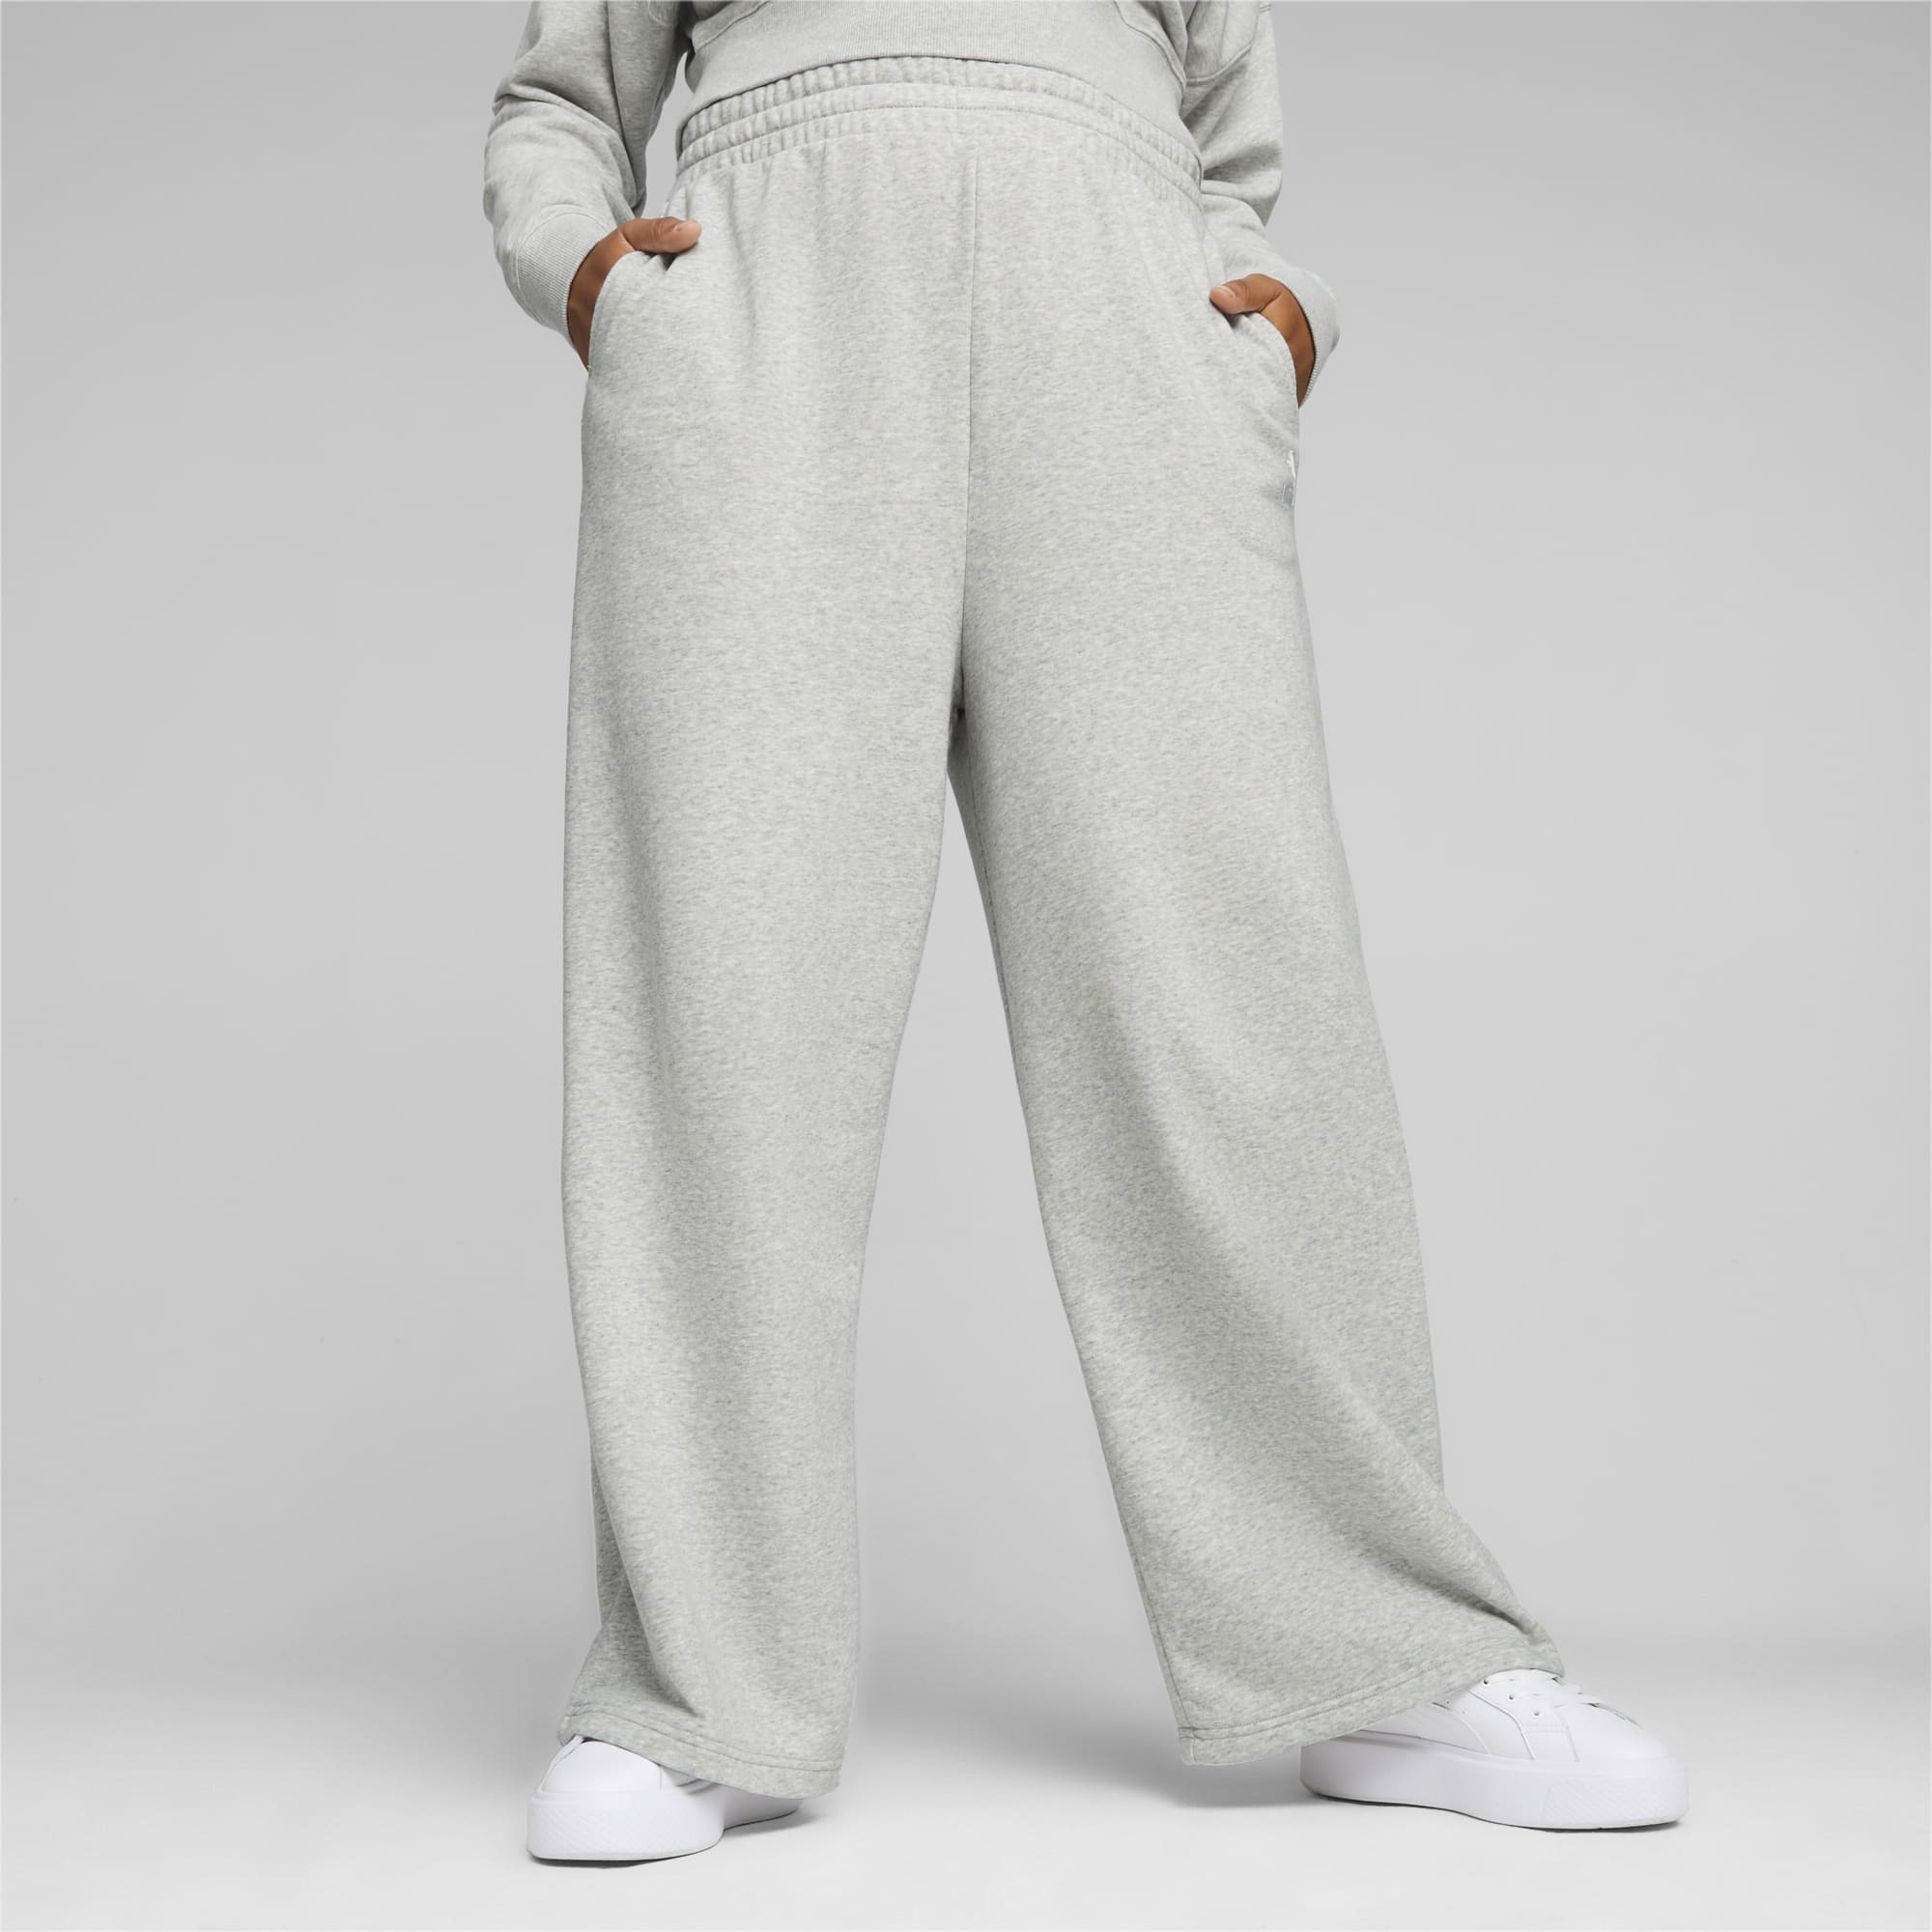 PUMA Classics Women's Relaxed Sweatpants, Light Grey Heather, Size XS, Clothing